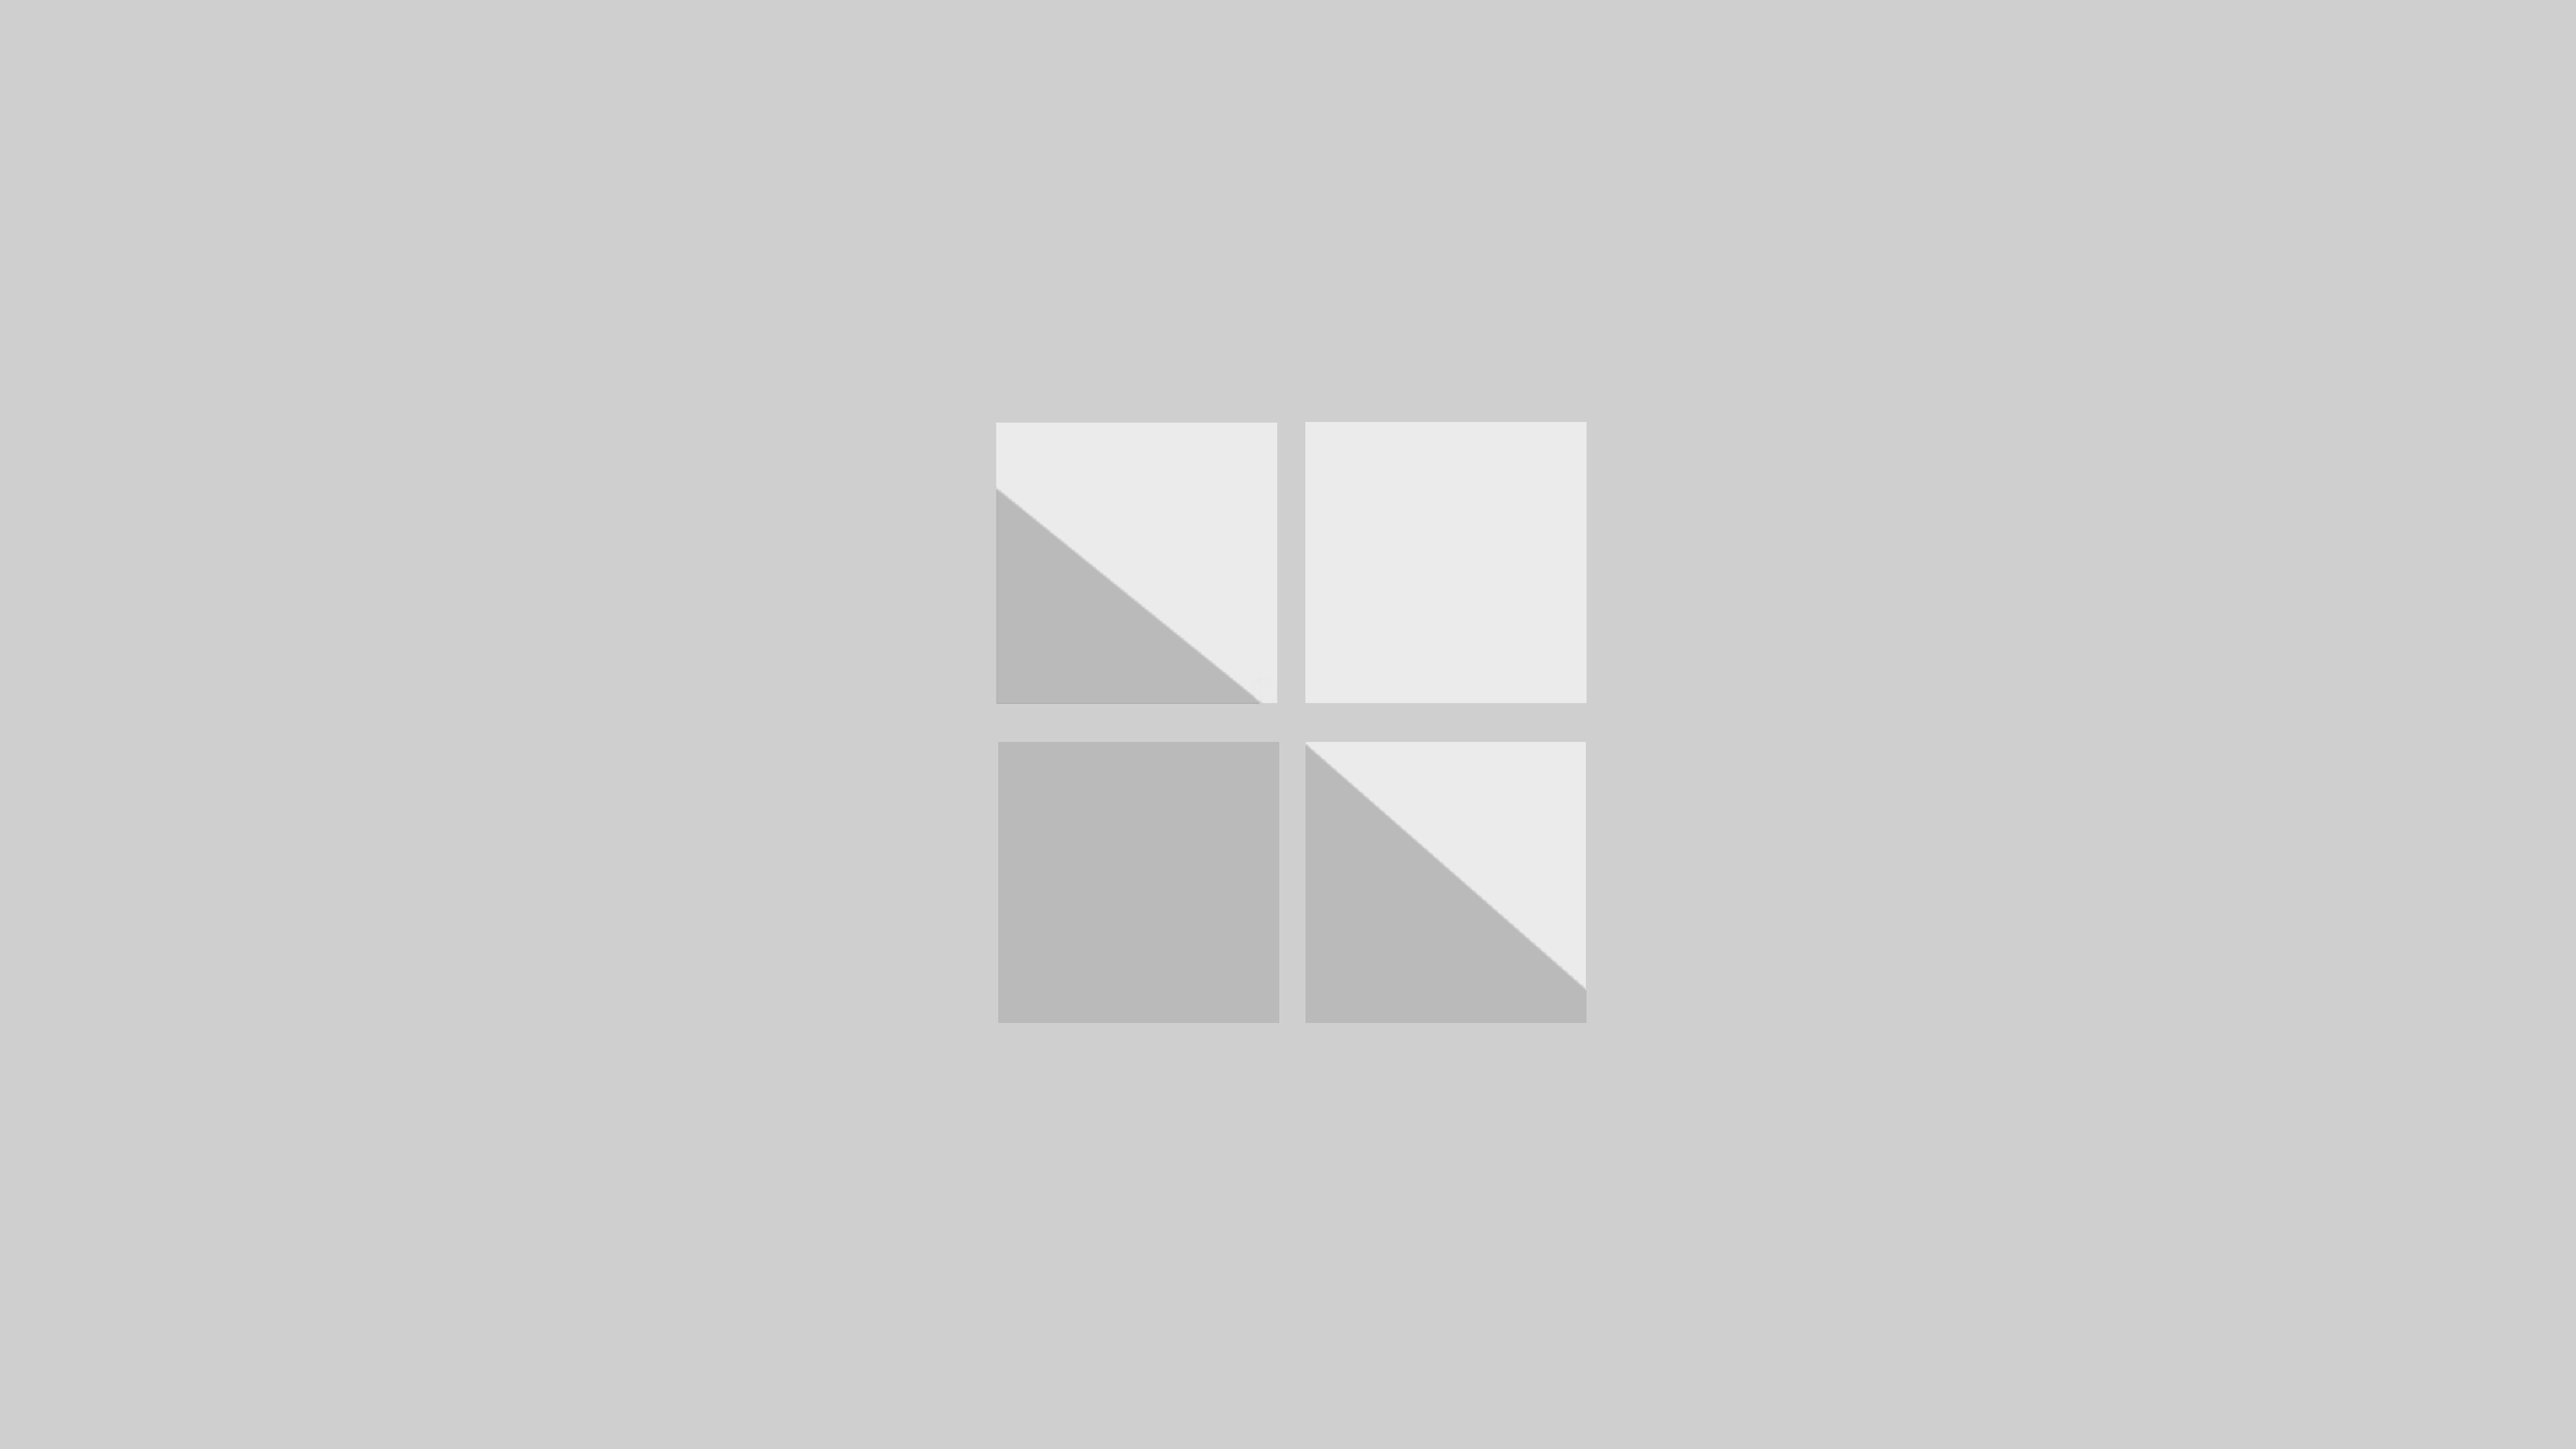 Microsoft Surface Book Logo - Microsoft Surface Book by IronManMark20 on DeviantArt